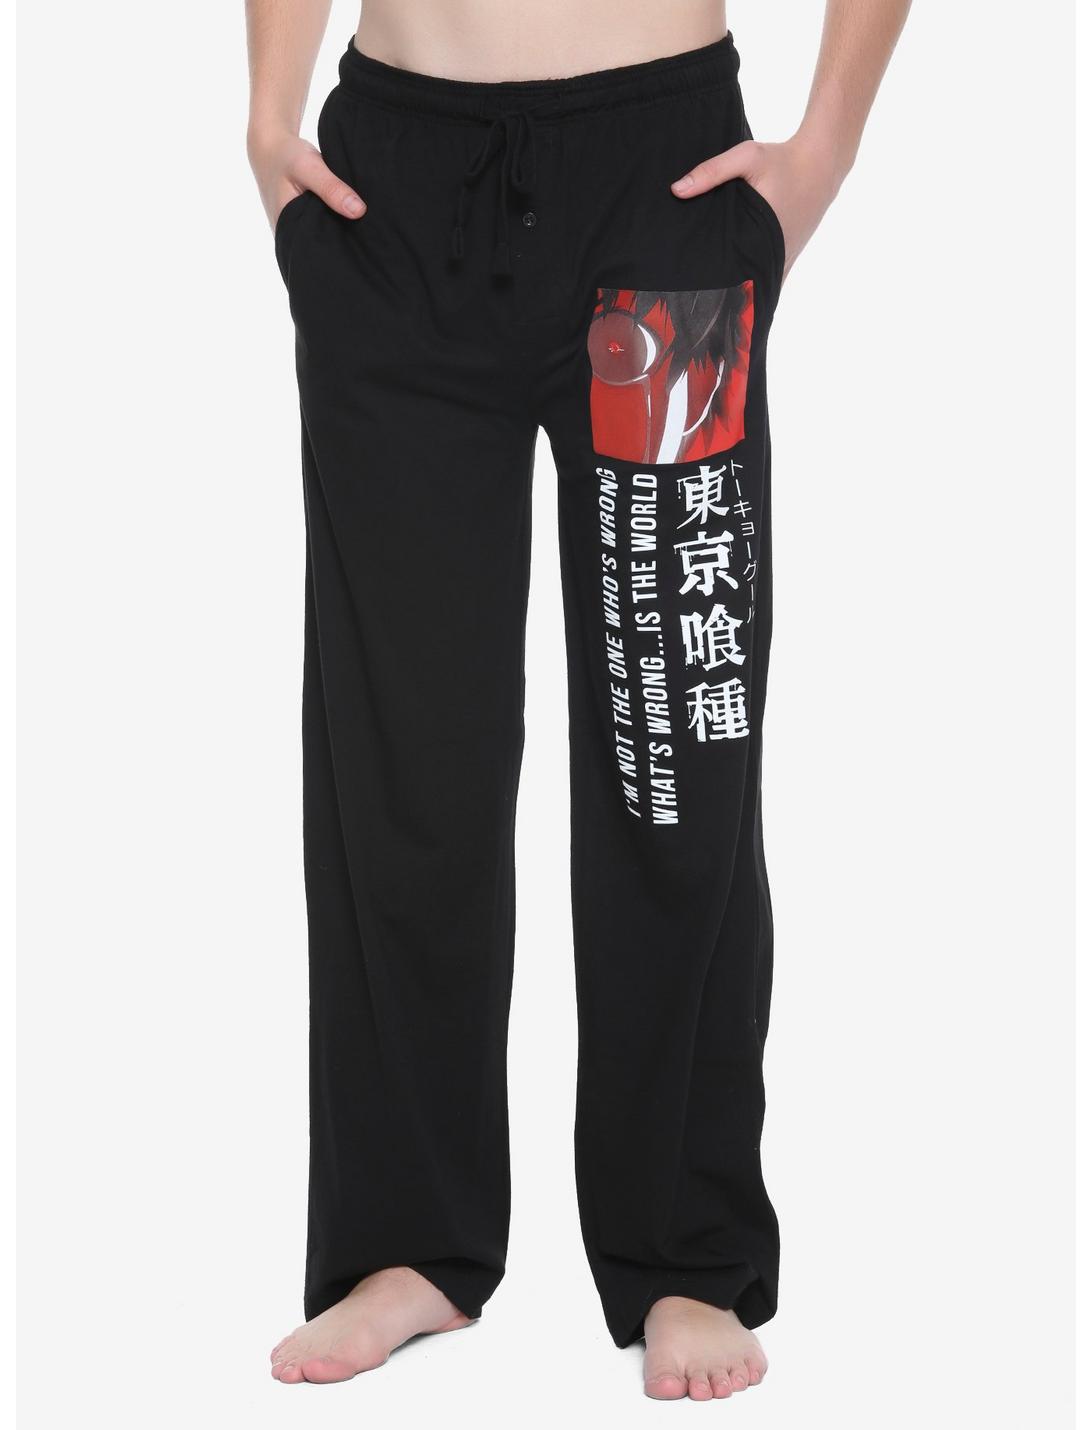 Tokyo Ghoul Not The One Guys Pajama Pants, BLACK, hi-res